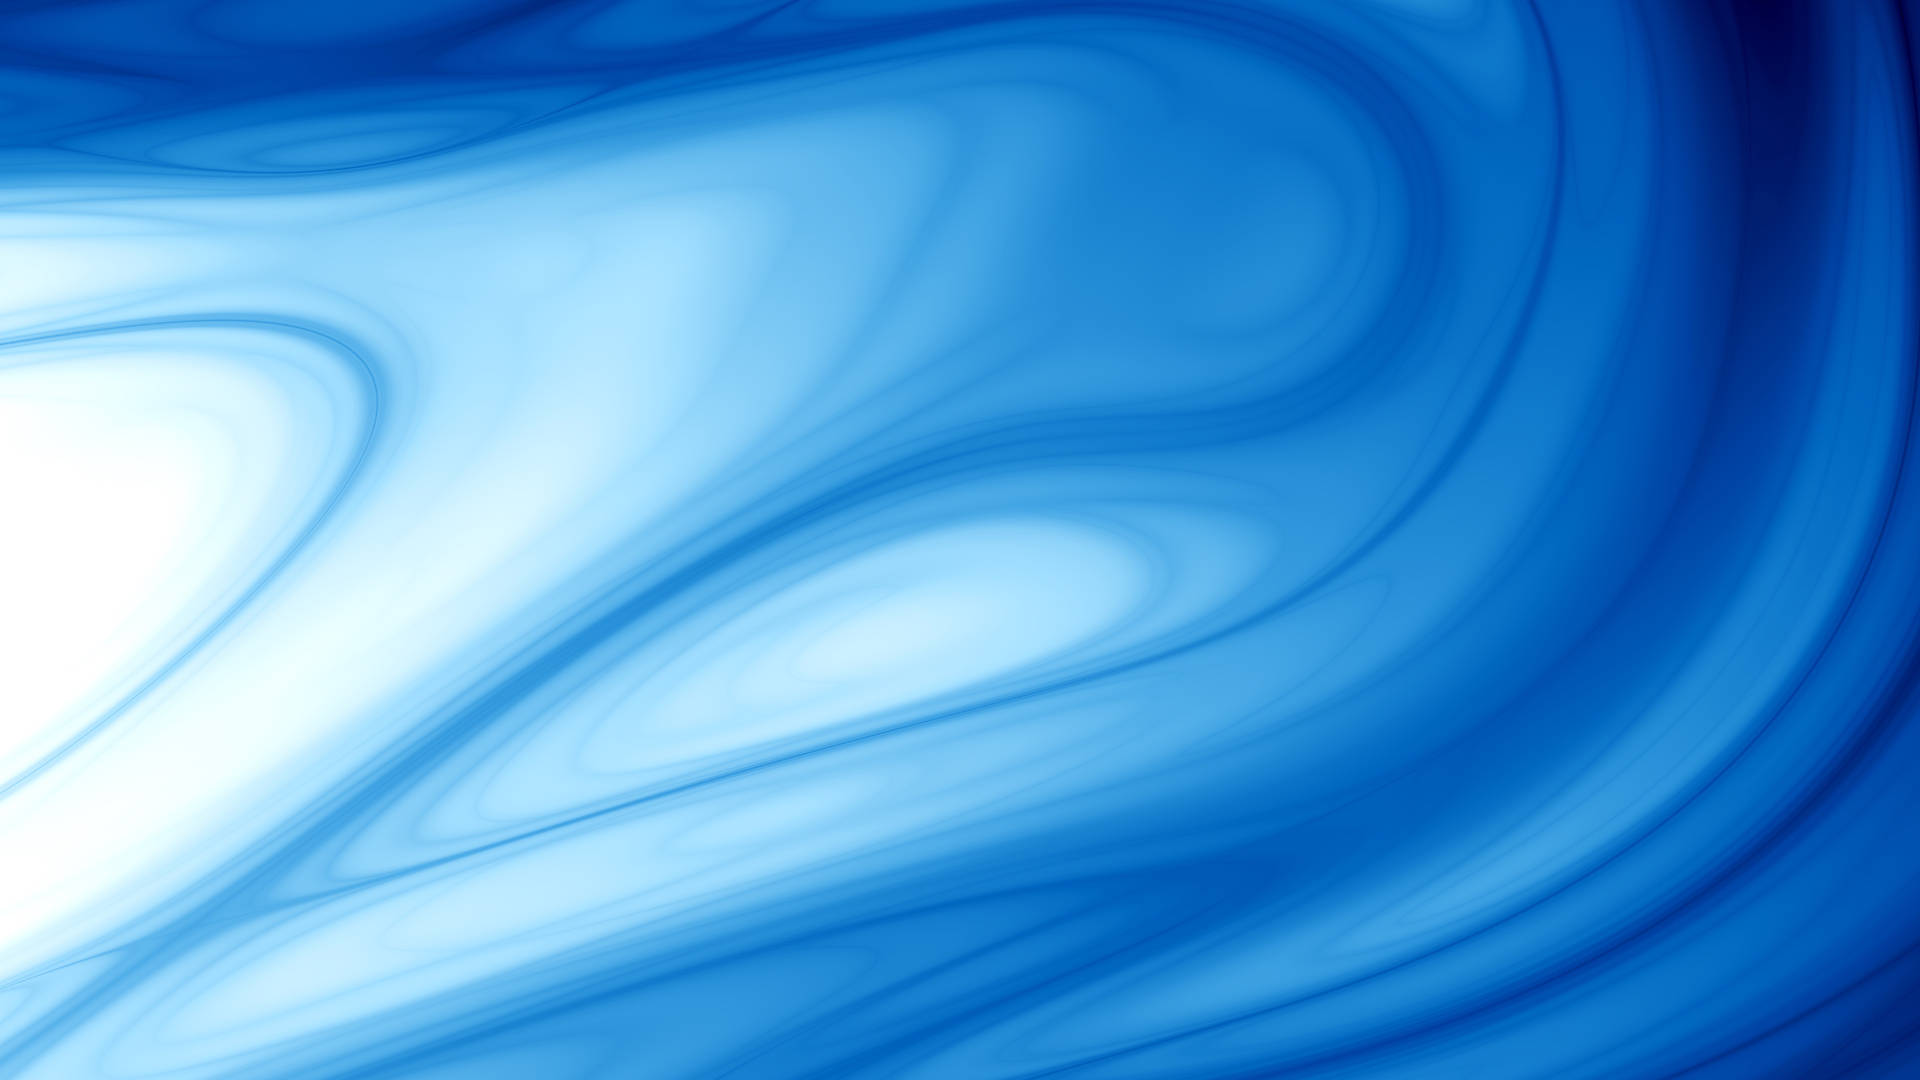 8k Ultra Hd Abstract Swirly Waves